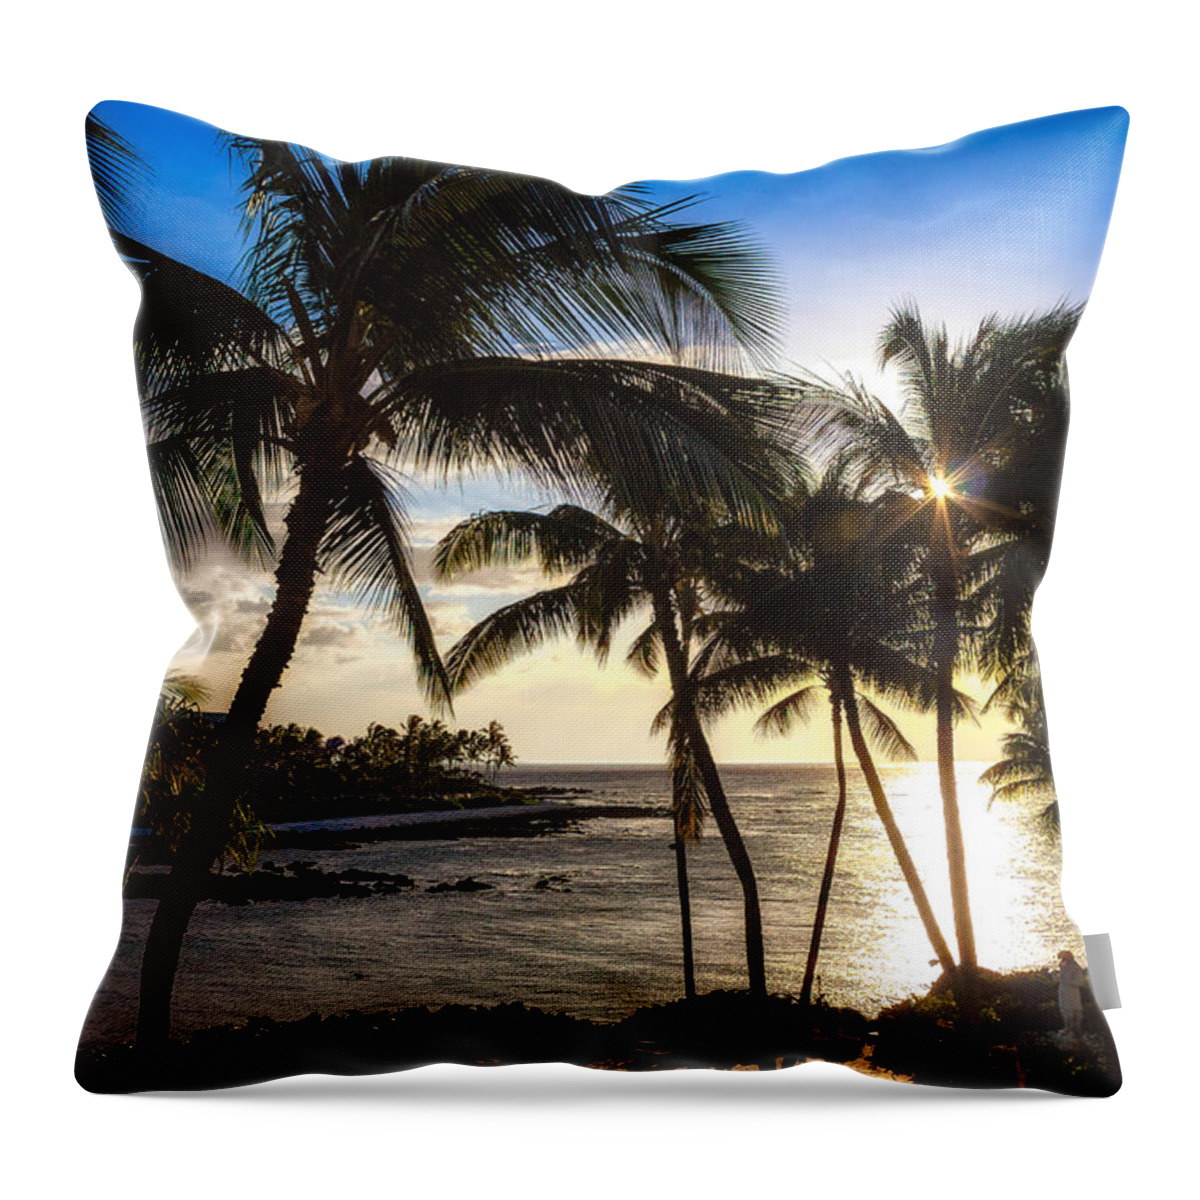 Hawaii Throw Pillow featuring the photograph Waikoloa Sunset by Lars Lentz